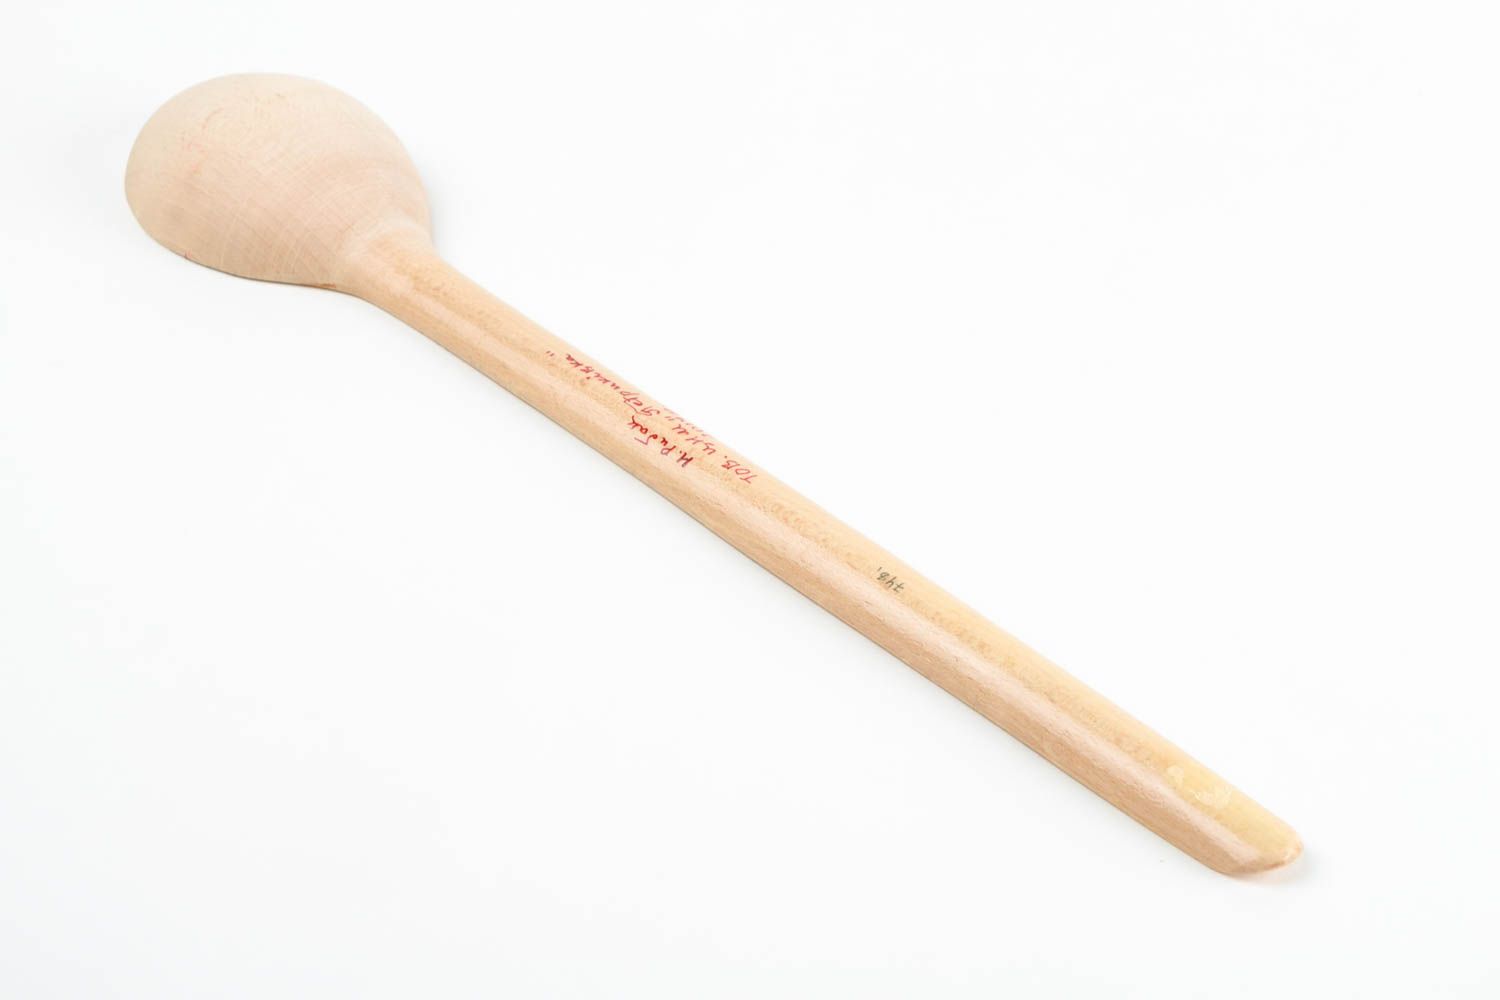 Handmade spoon designer spoon for kitchen decor ideas wooden spoon gift ideas photo 5